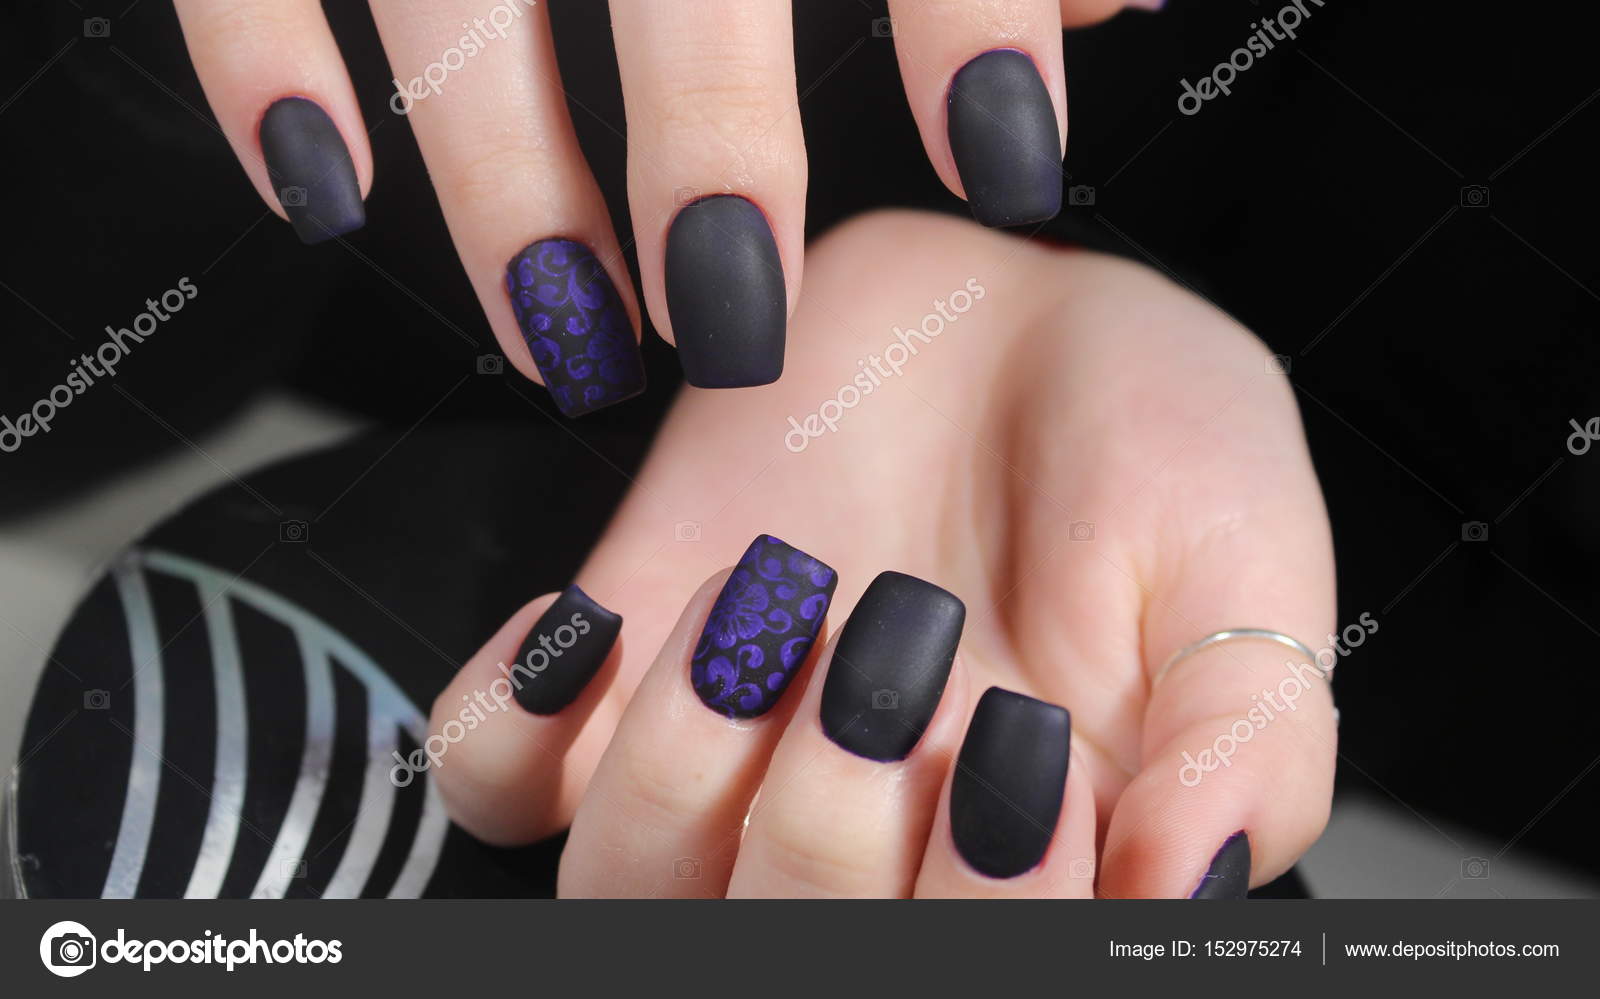 Design Of Manicure Matt Black And Blue Nails Stock Photo C Smirmaxstock 152975274